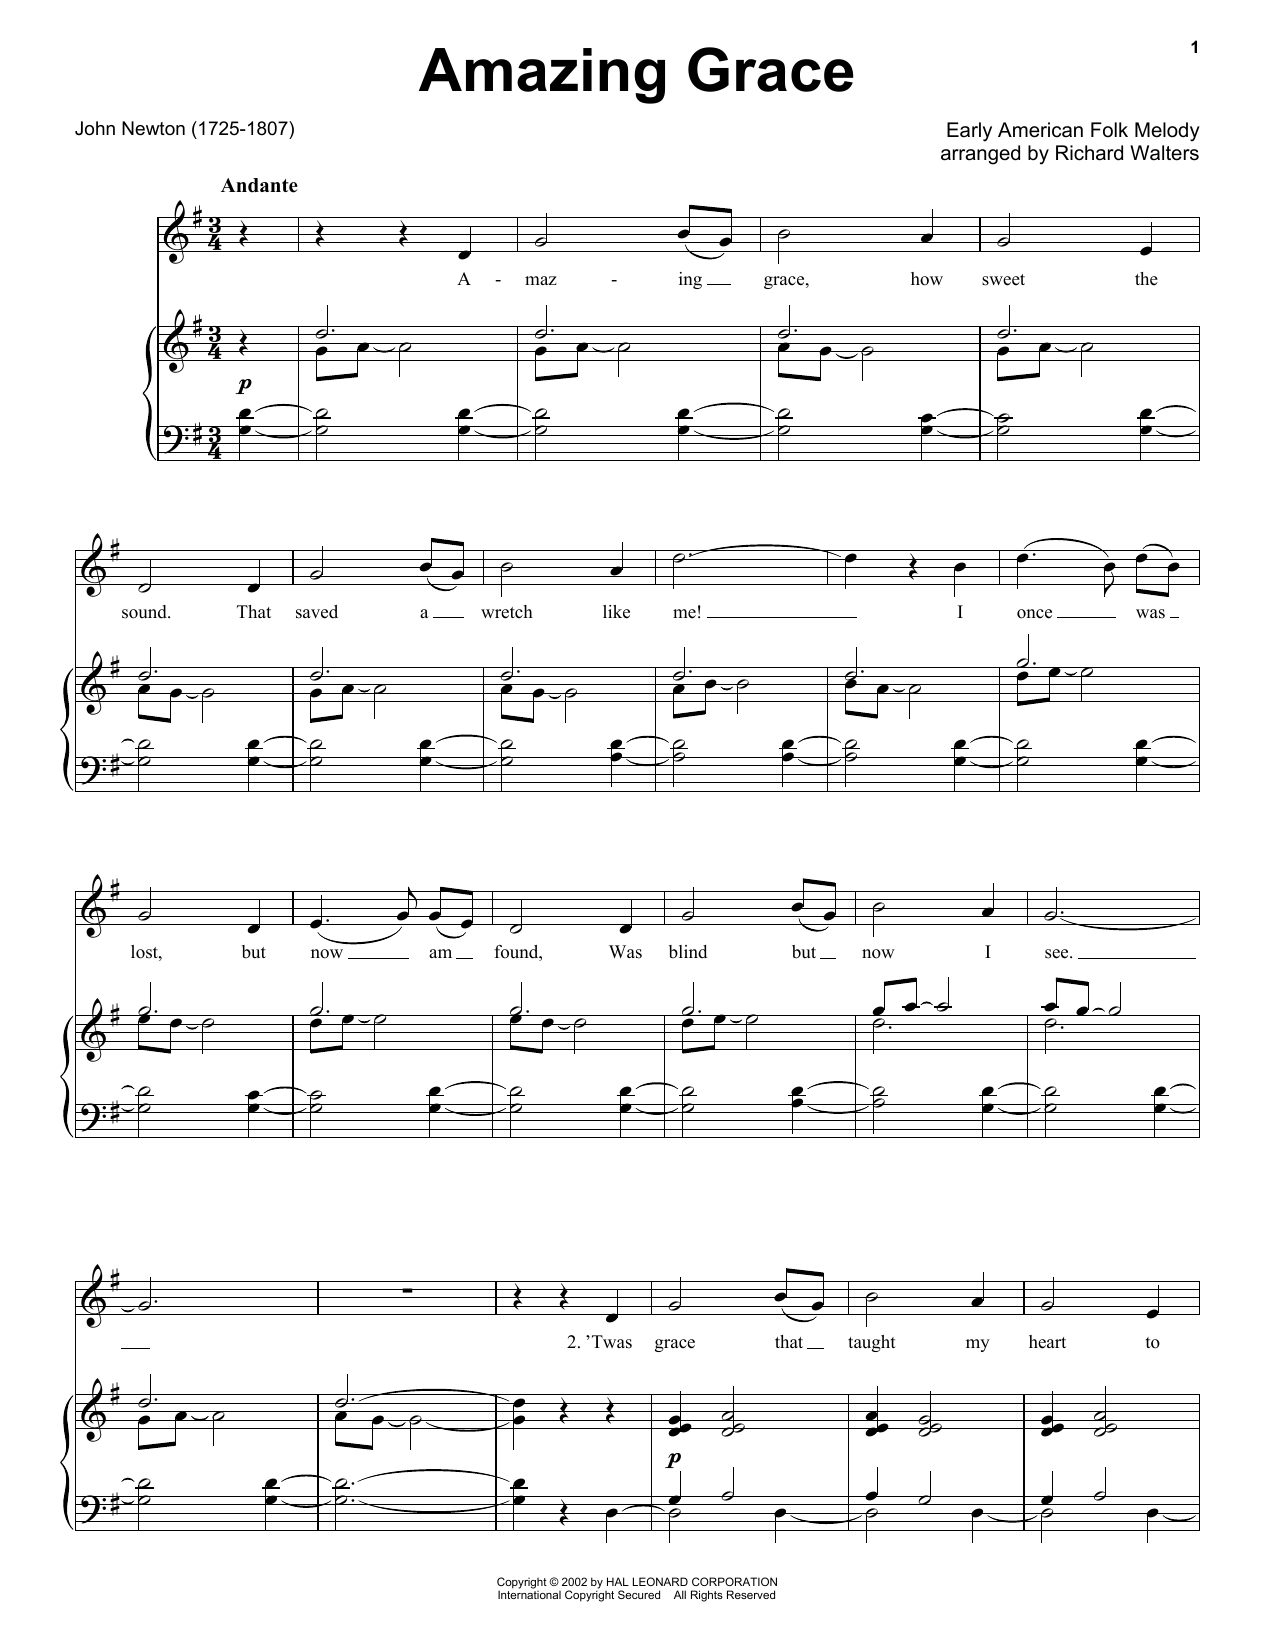 John Newton Amazing Grace Sheet Music Notes Download Printable Pdf Score 83000